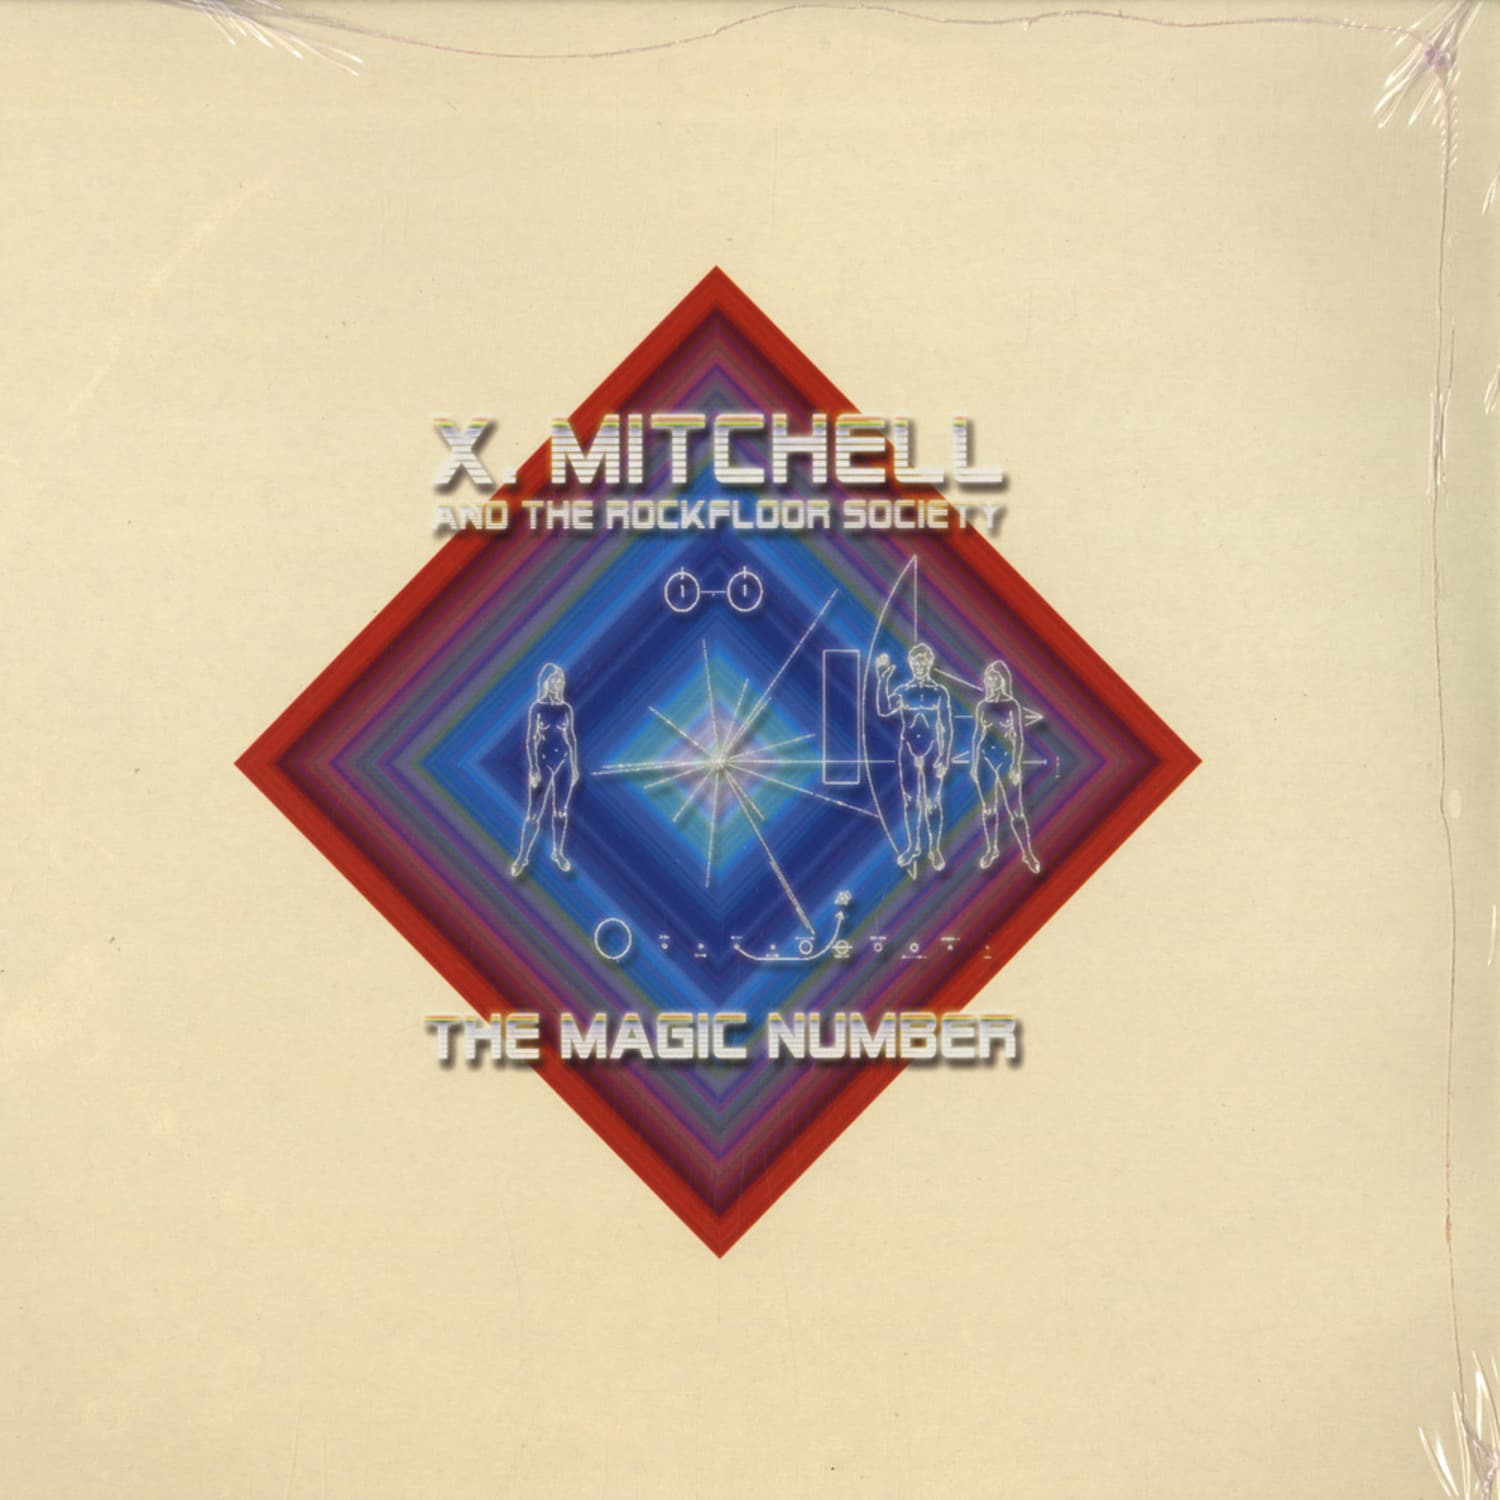 X.Mitchell and The Rockfloor Society - THE MAGIC NUMER